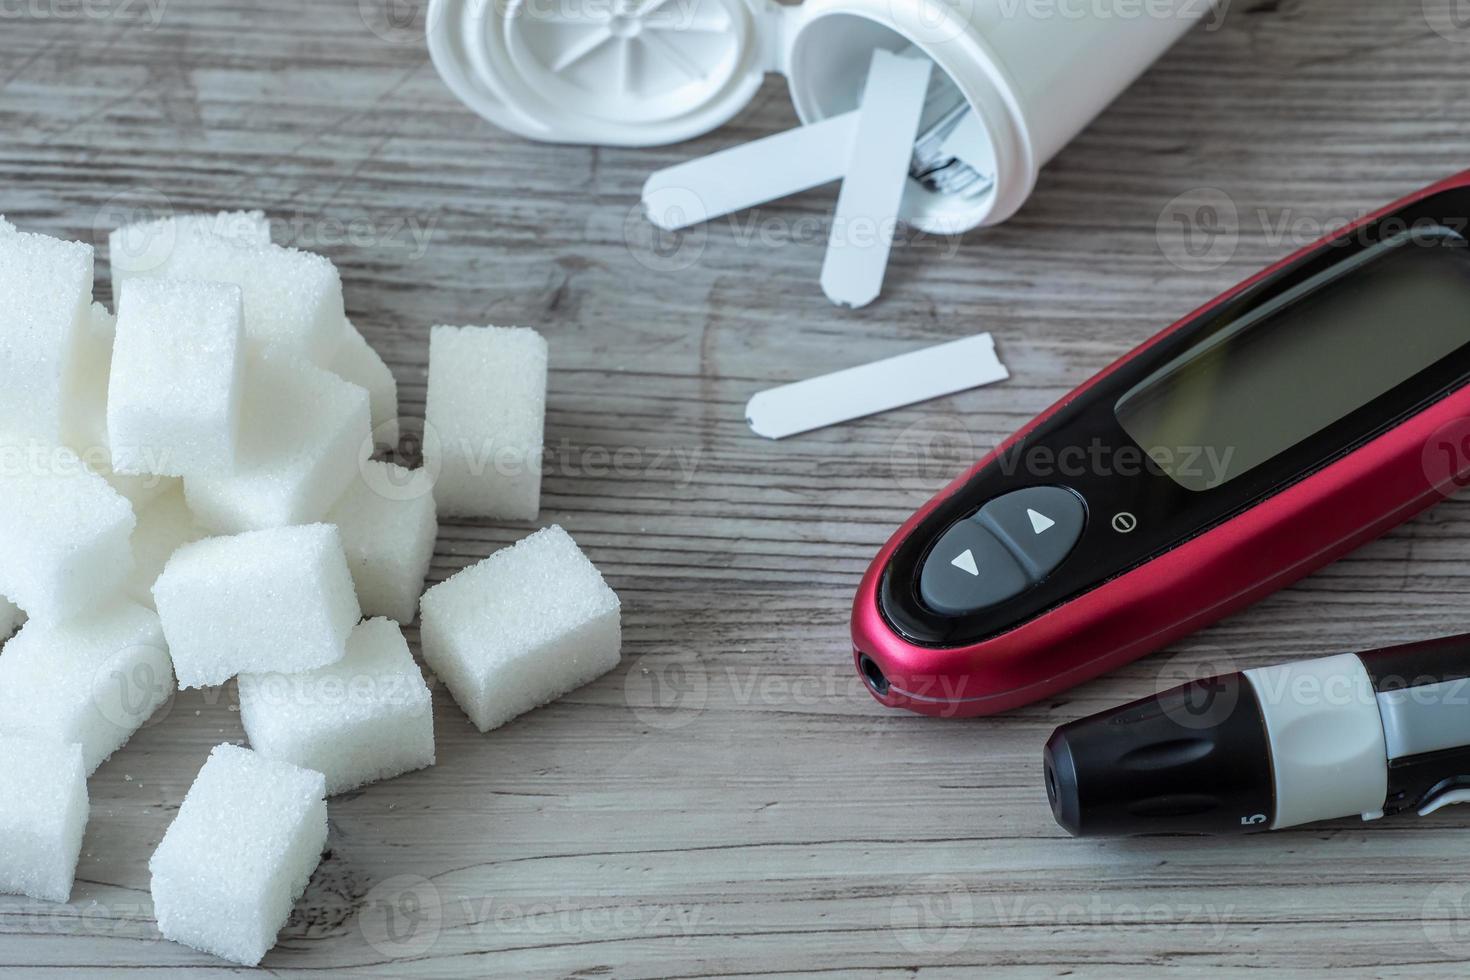 socker kuber på de tabell. diabetes testning foto